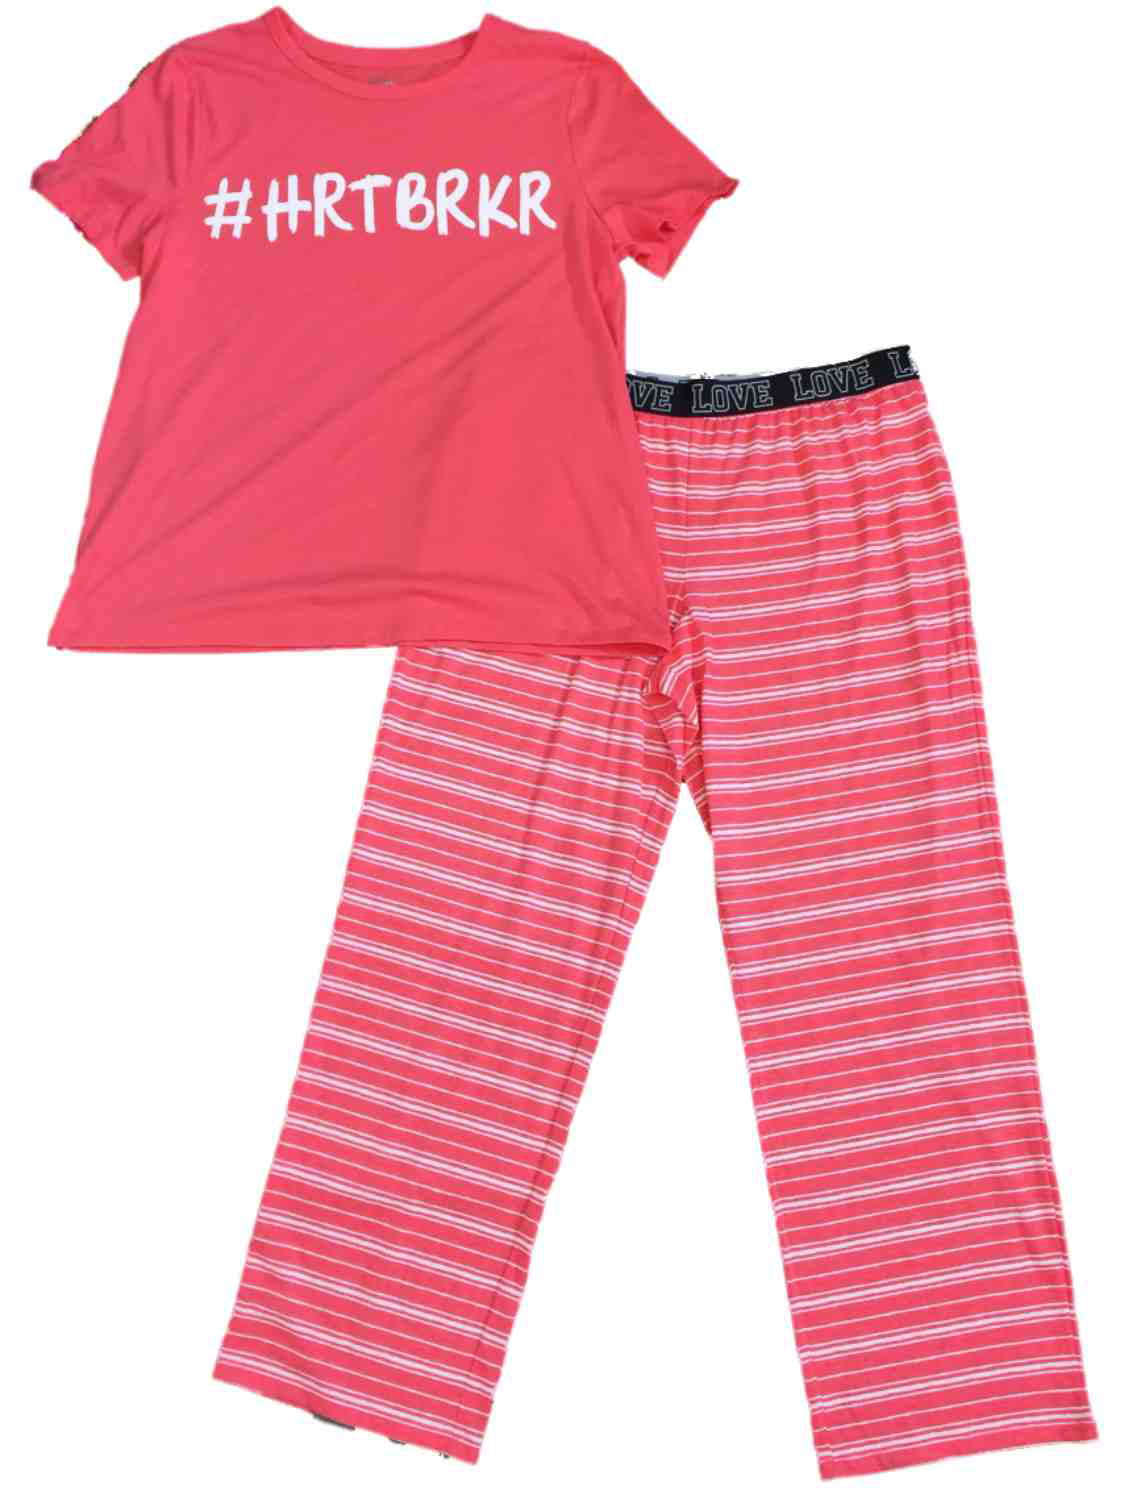 Womens #HRTBRKR Coral Pink & White Striped Pajamas Hashtag Summer Sleep ...